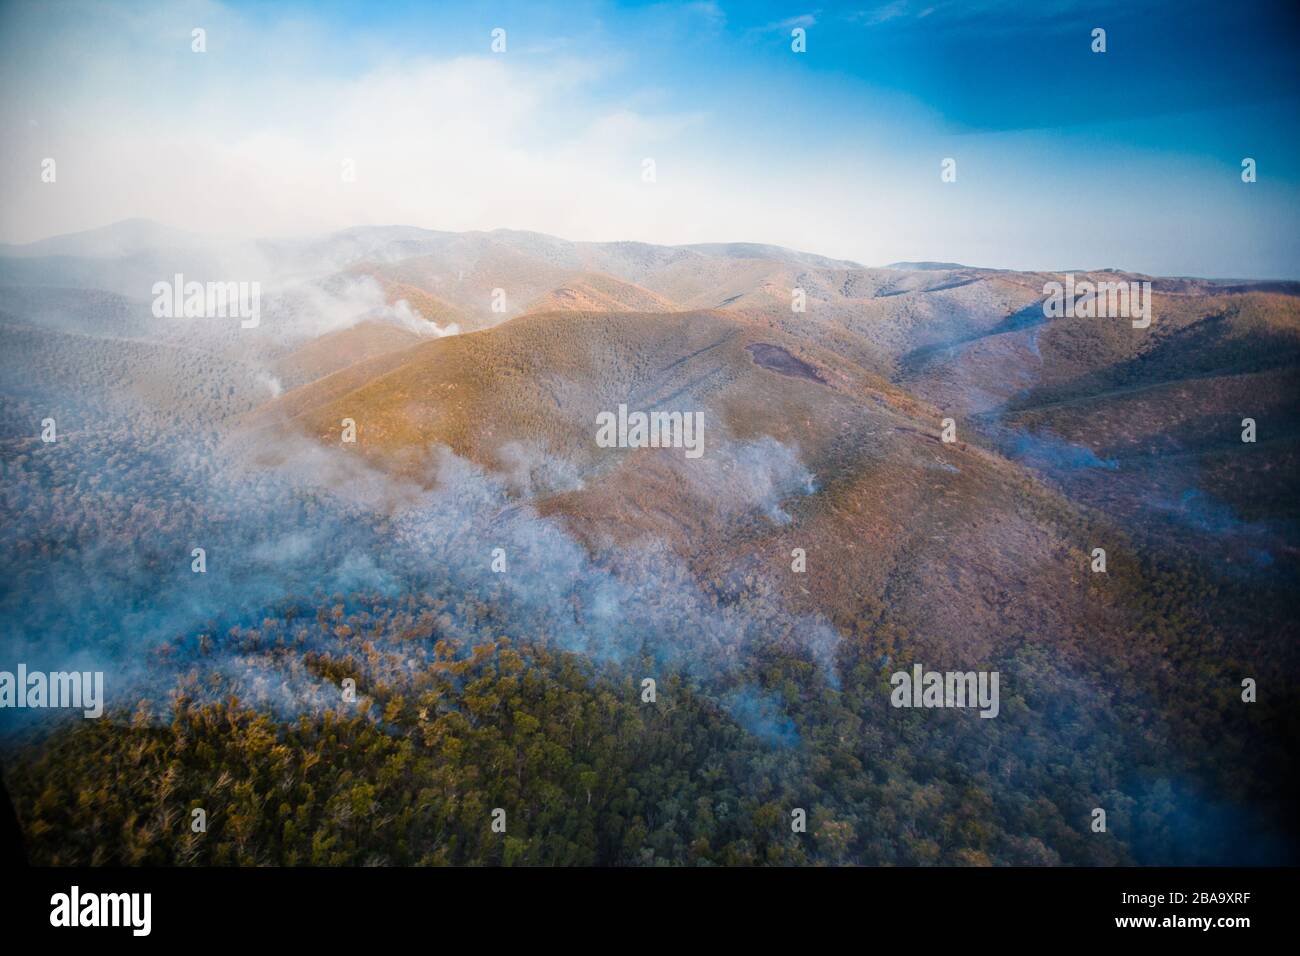 Flames and smoke cover an Australia wilderness mountain during bushfire season.  Victoria, Australia Stock Photo